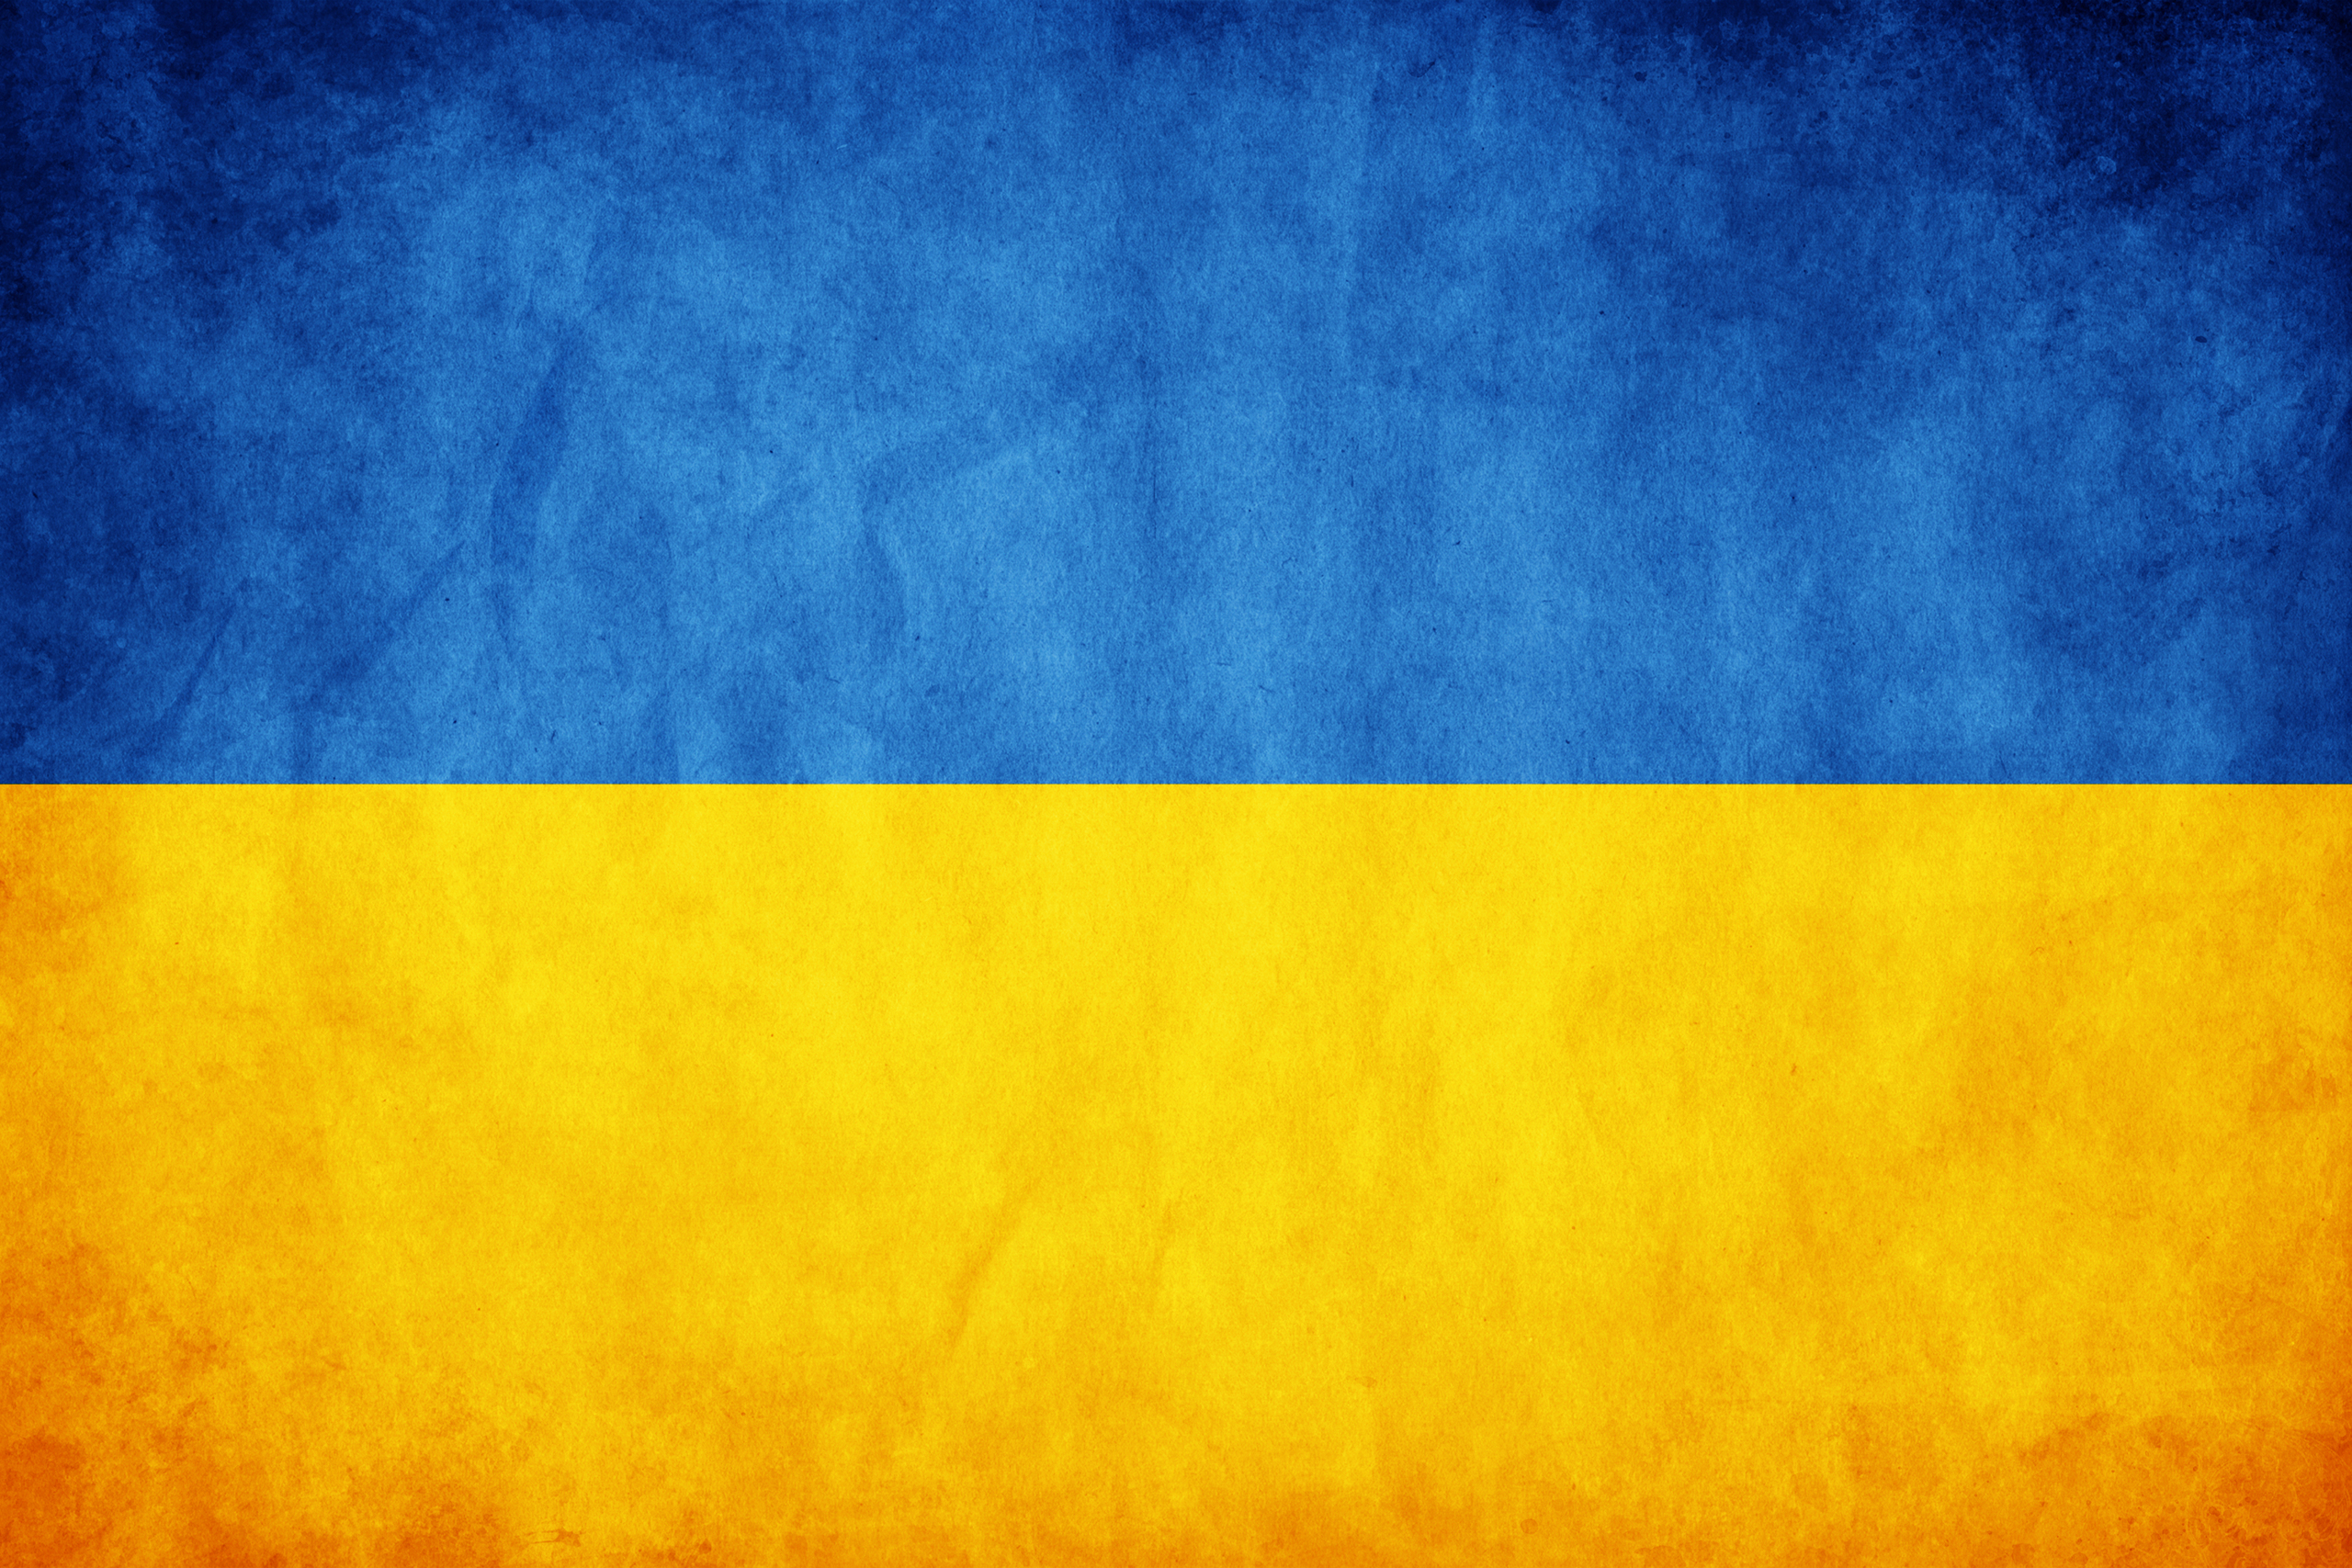 Ukrainian Flag - Ukraine фото (21362785) - Fanpop